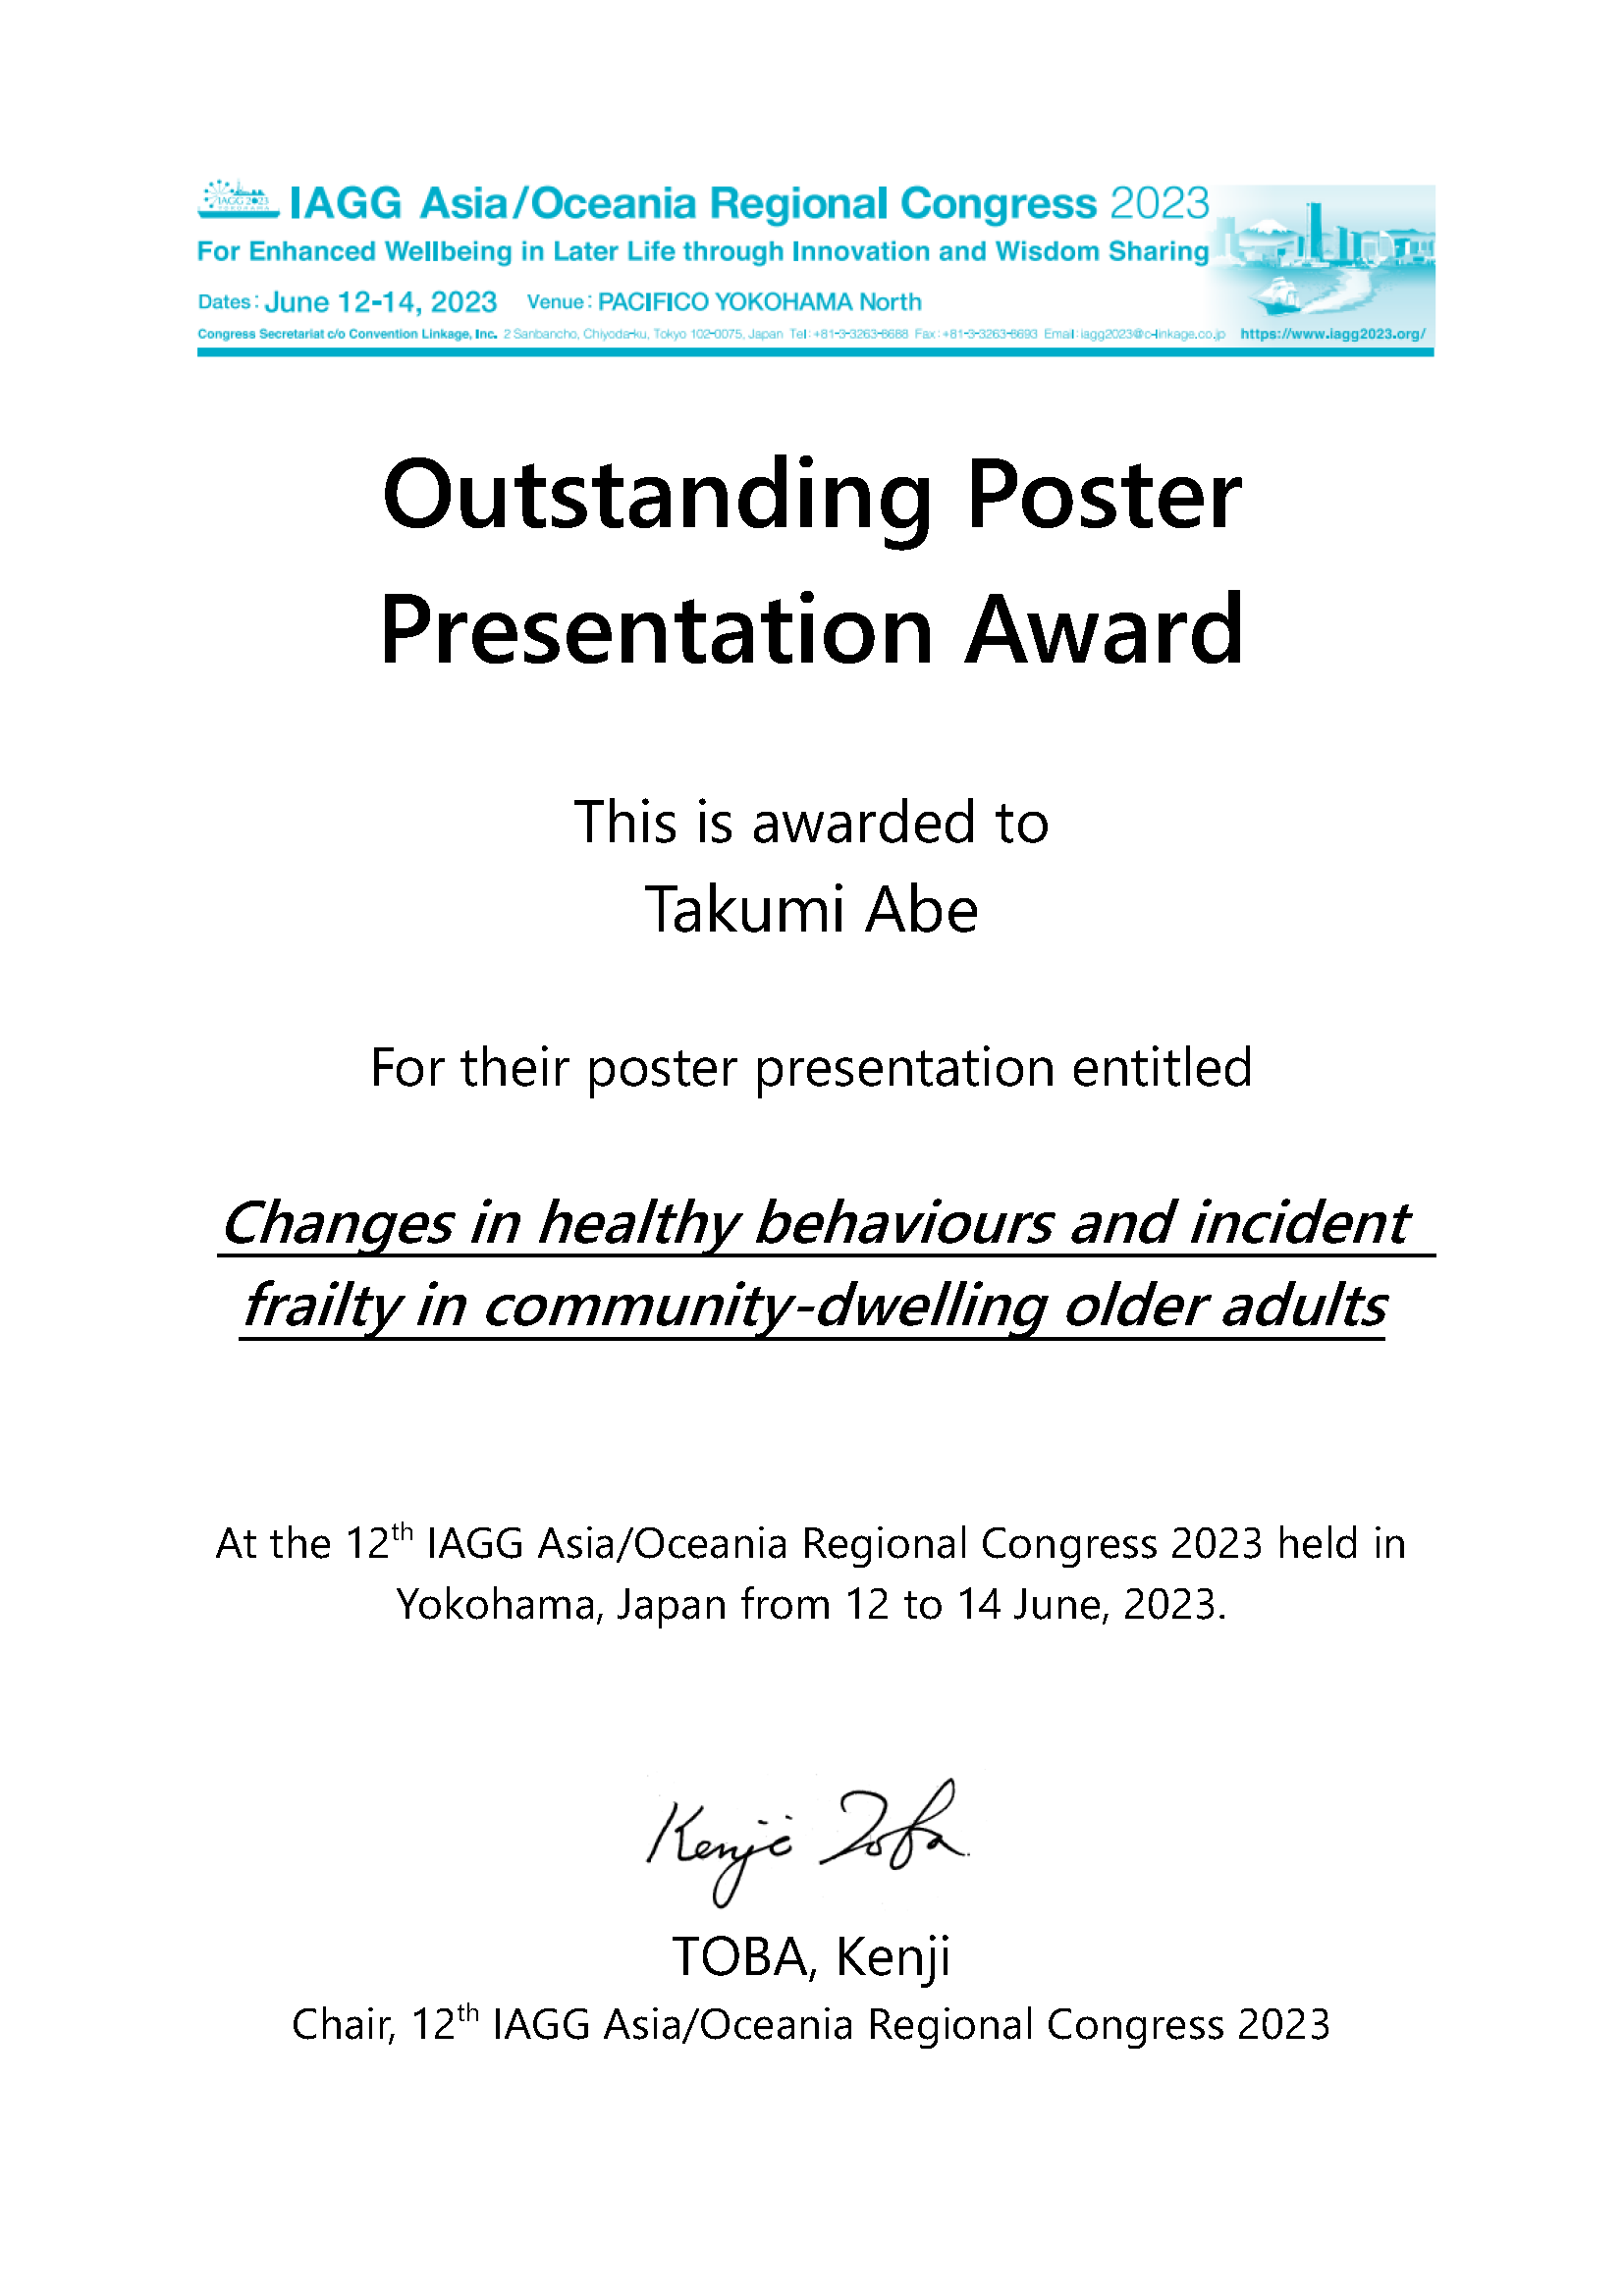 Outstanding Poster Presentation Award_1008_Takumi Abe rev.png